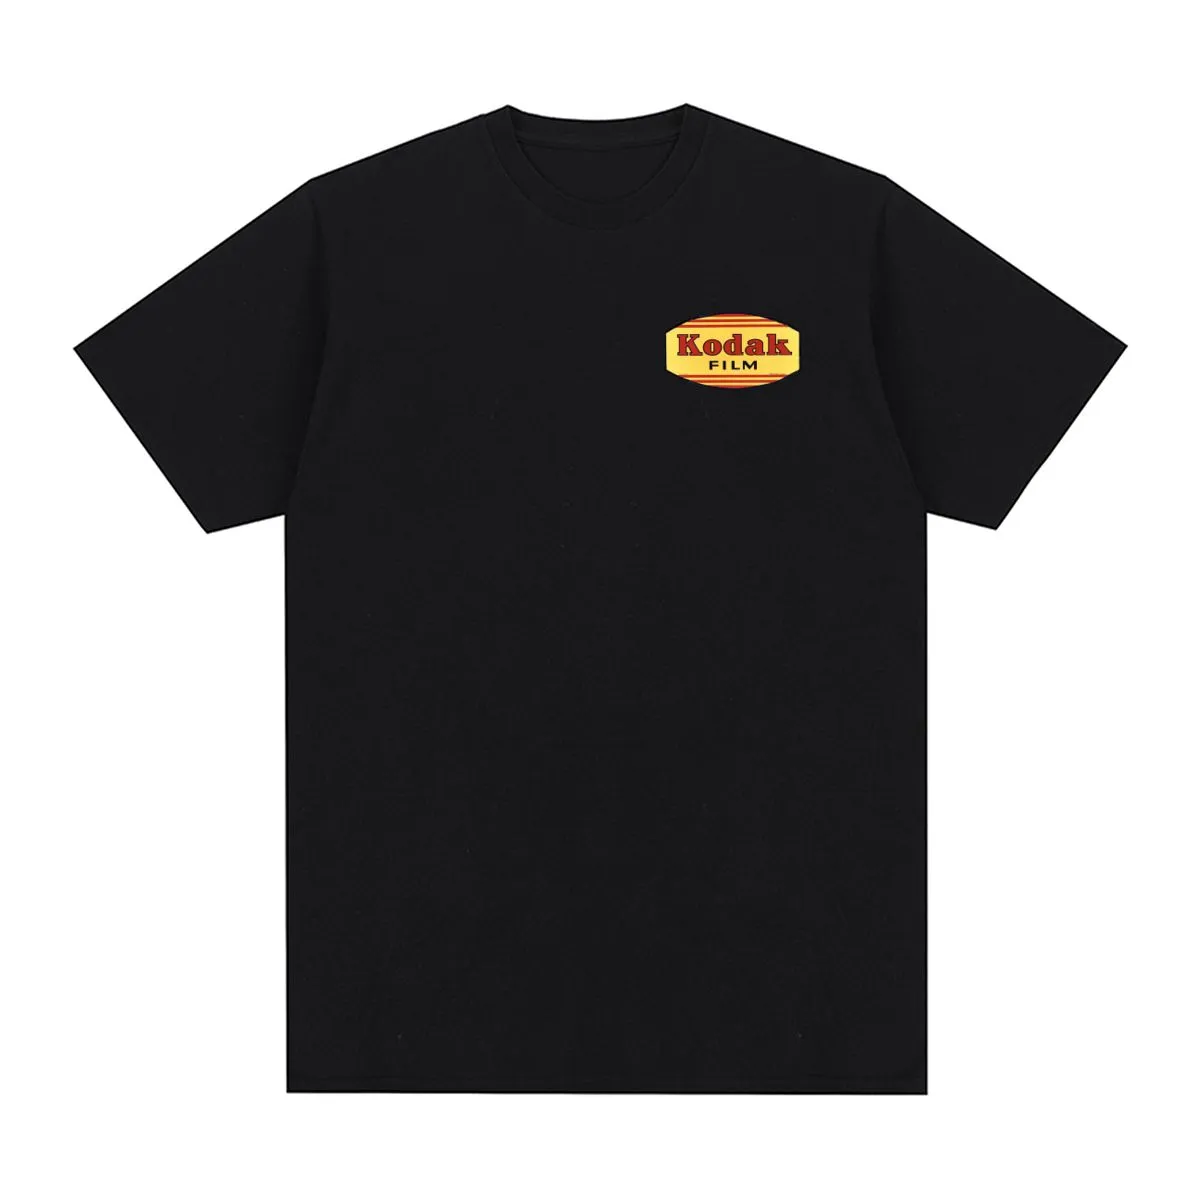 Kodak Vintage T-shirt Korea Kamera Film Retro Baumwolle Männer T shirt Neue T T-shirt Frauen Tops